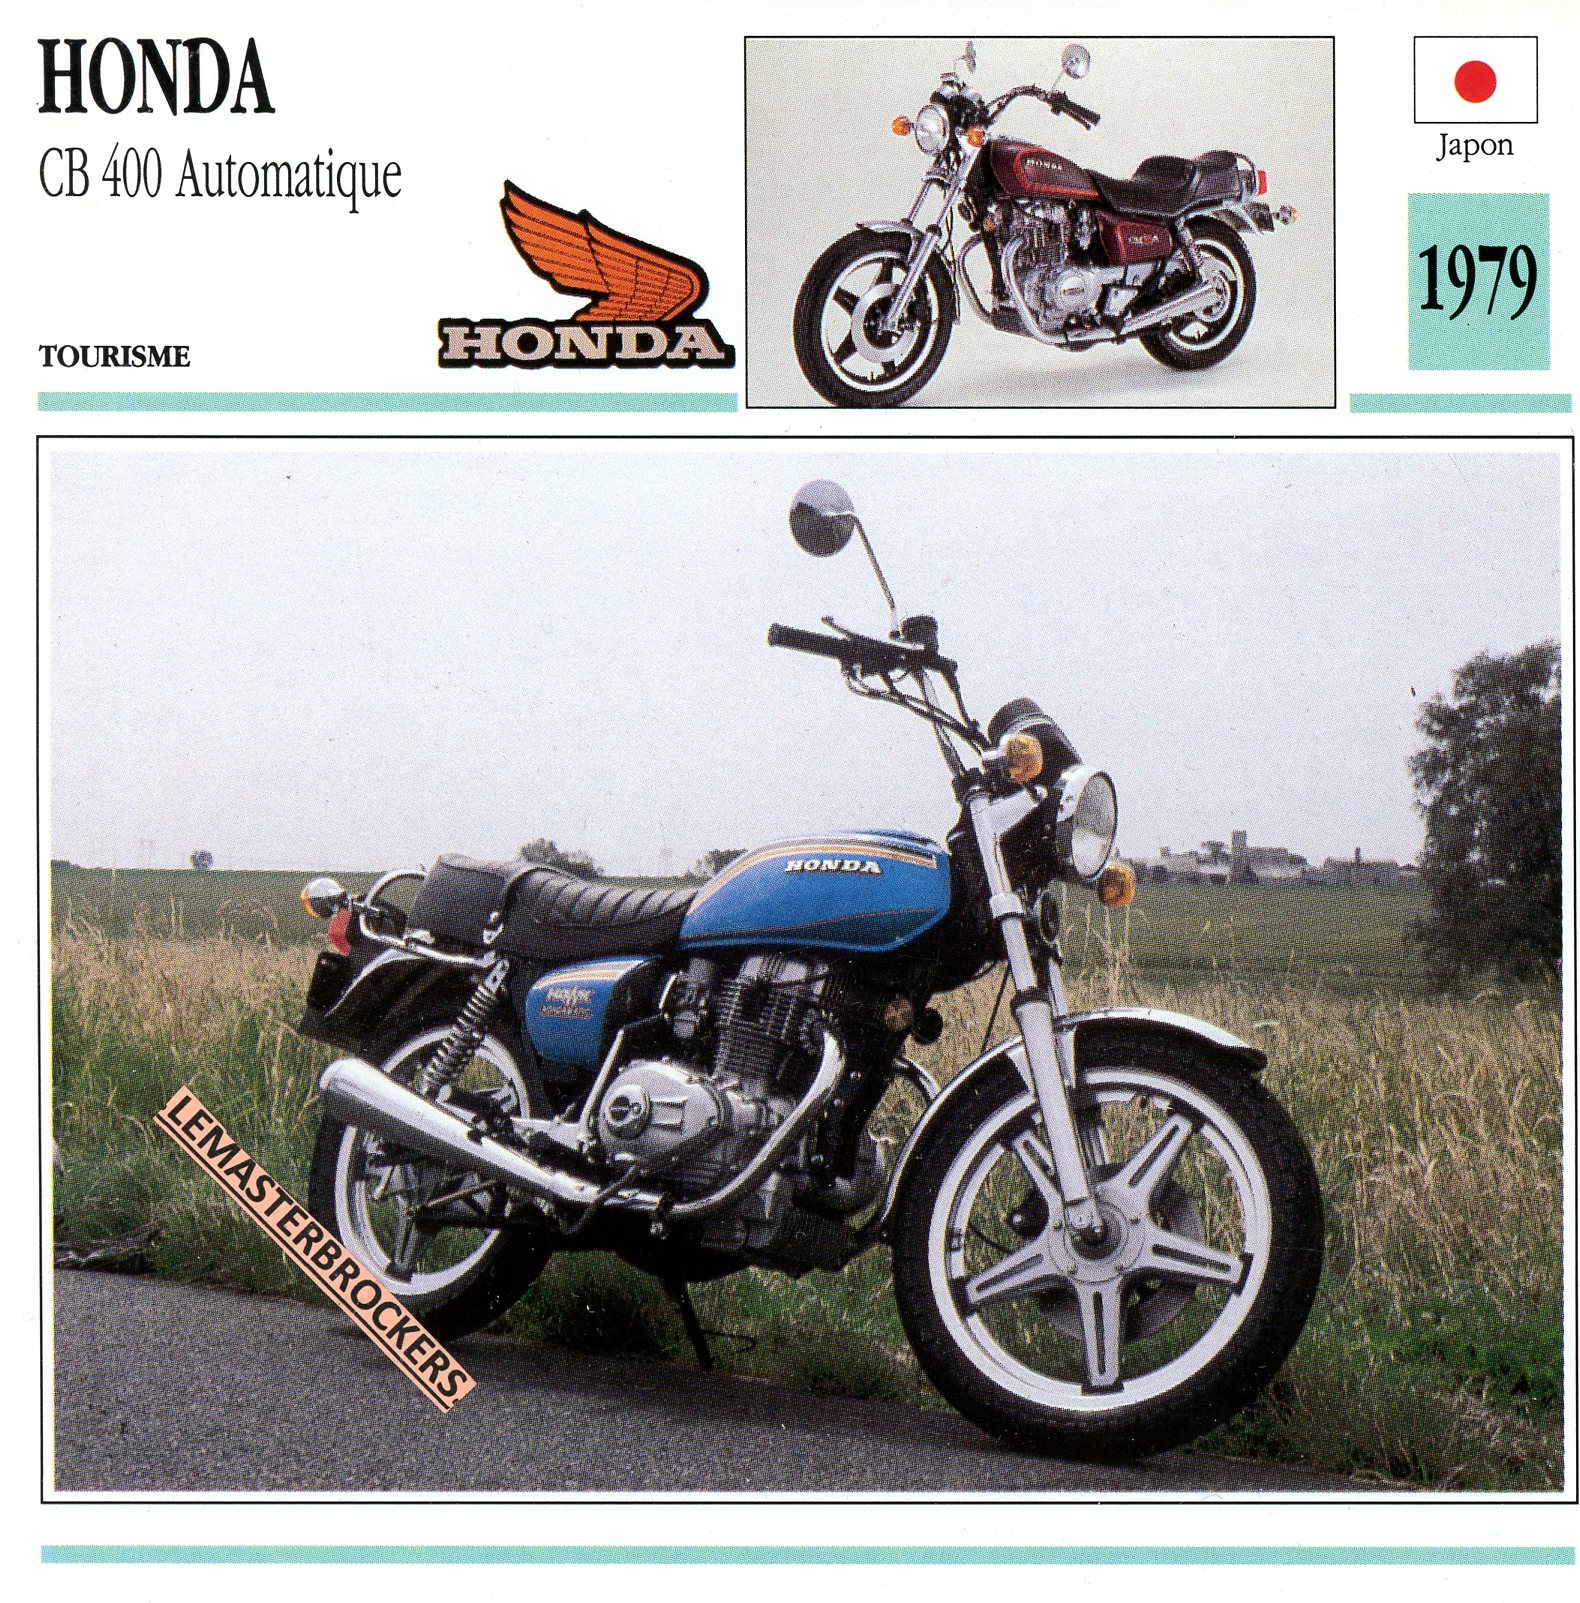 FICHE-MOTO-HONDA-CB400-CB-1979-LEMASTERBROCKERS-CARS-MOTORCYCLE